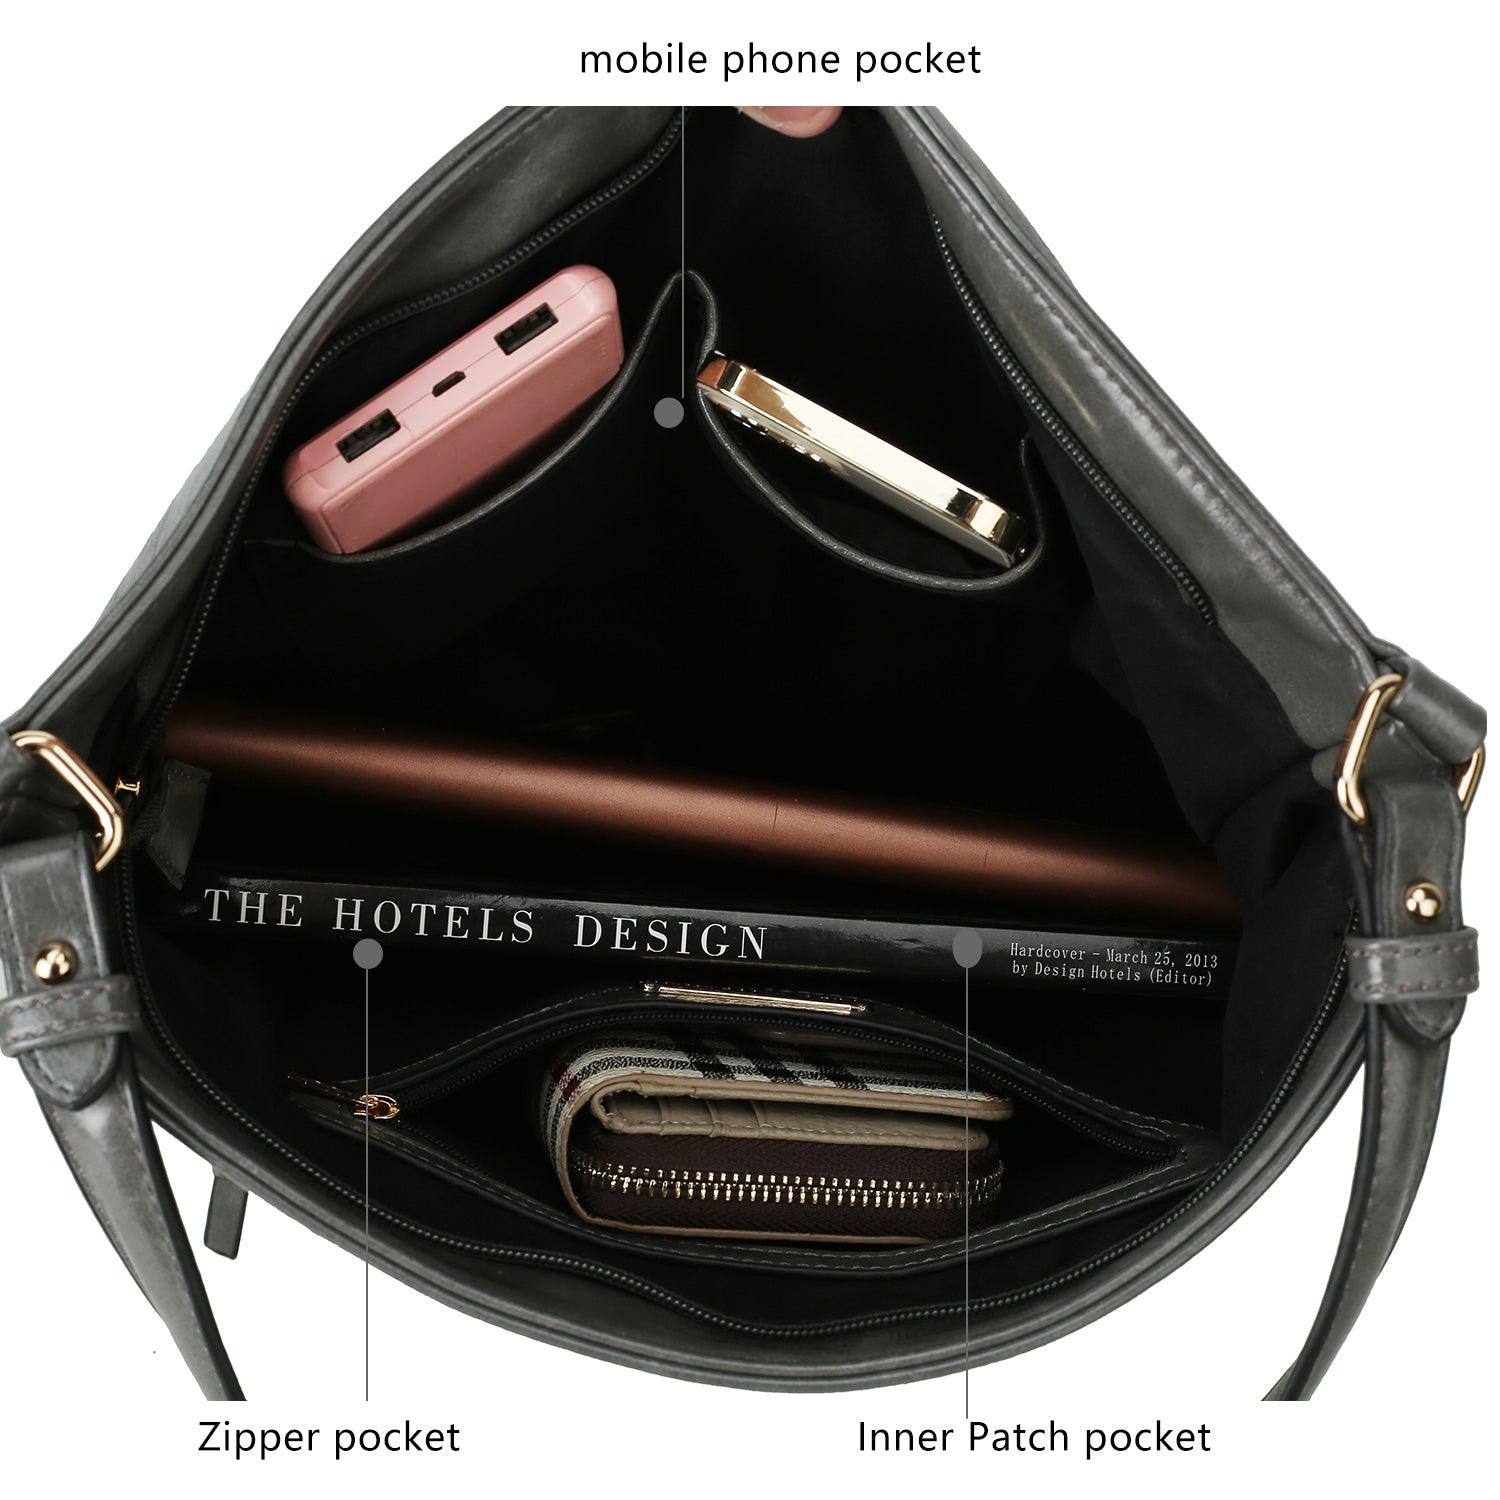 Wallets, Handbags & Accessories Sierra Vegan Leather Women’s Shoulder Bag